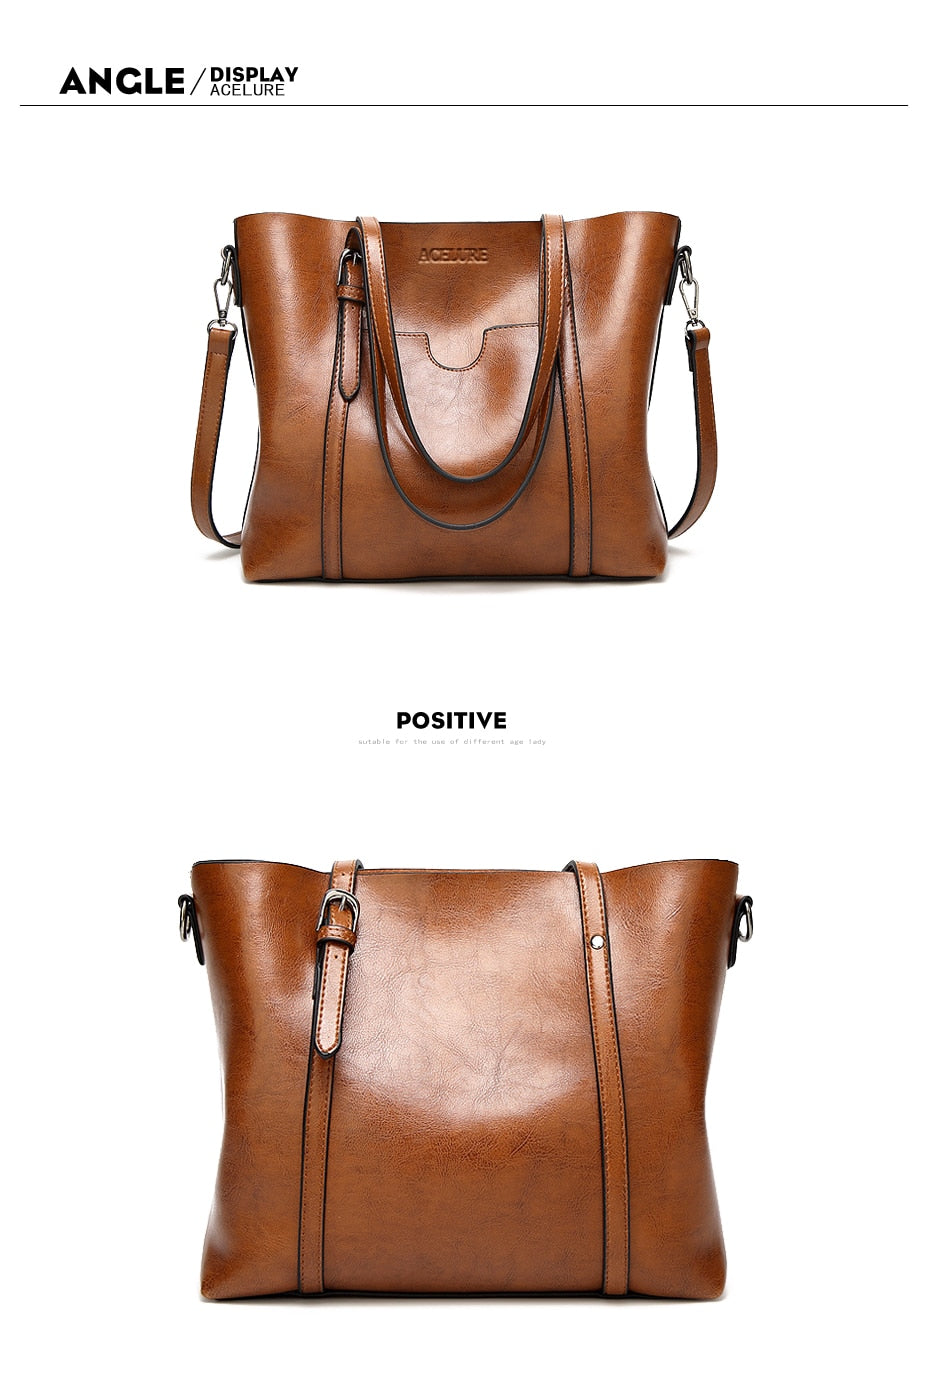 ACELURE Women's Leather Handbag